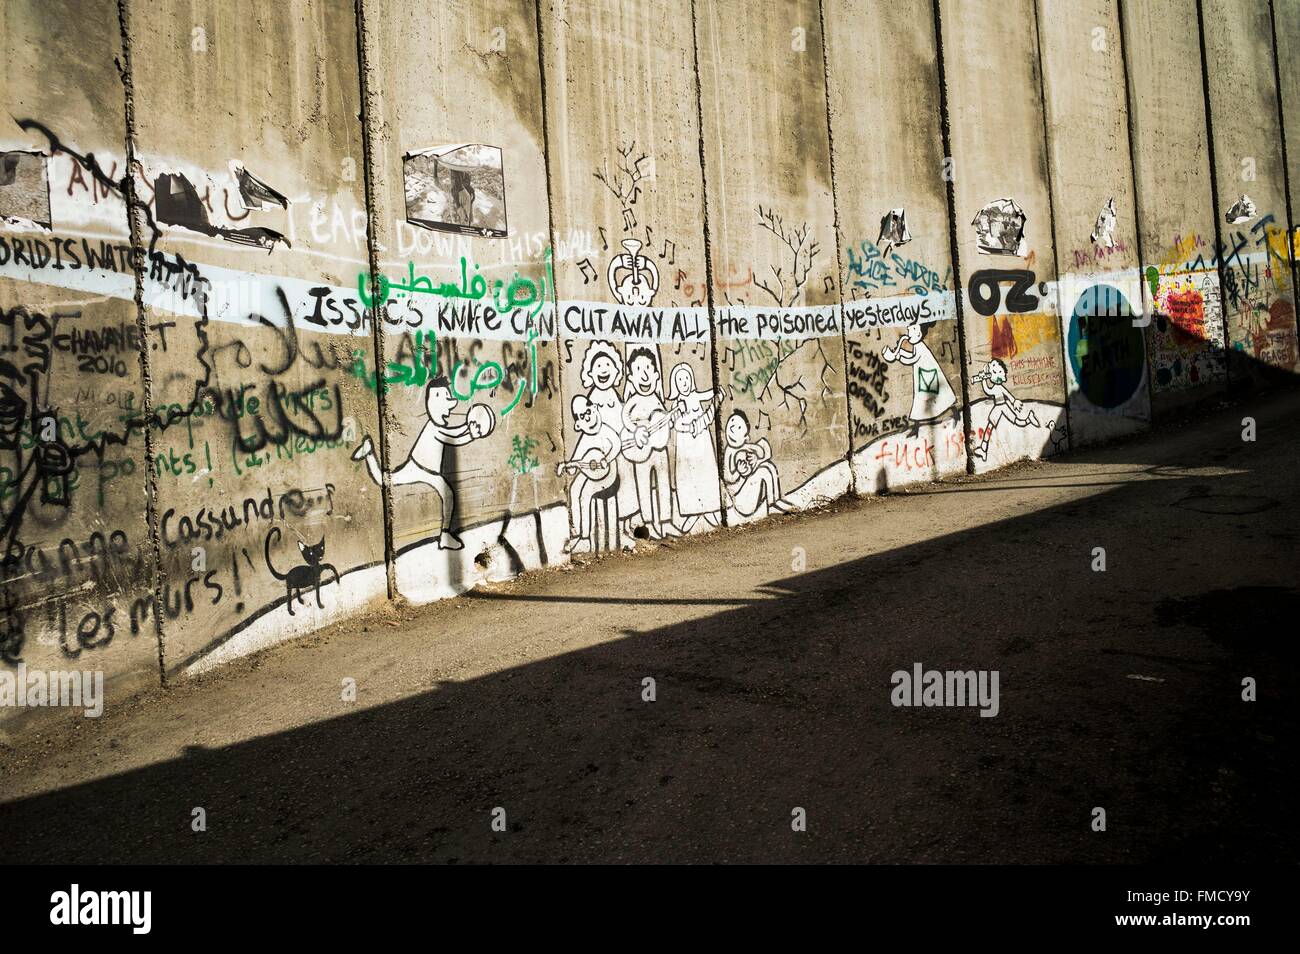 Israel, Palestine, the West Bank ( litigious territory), Bethleem, Graffs of not identified artists Stock Photo